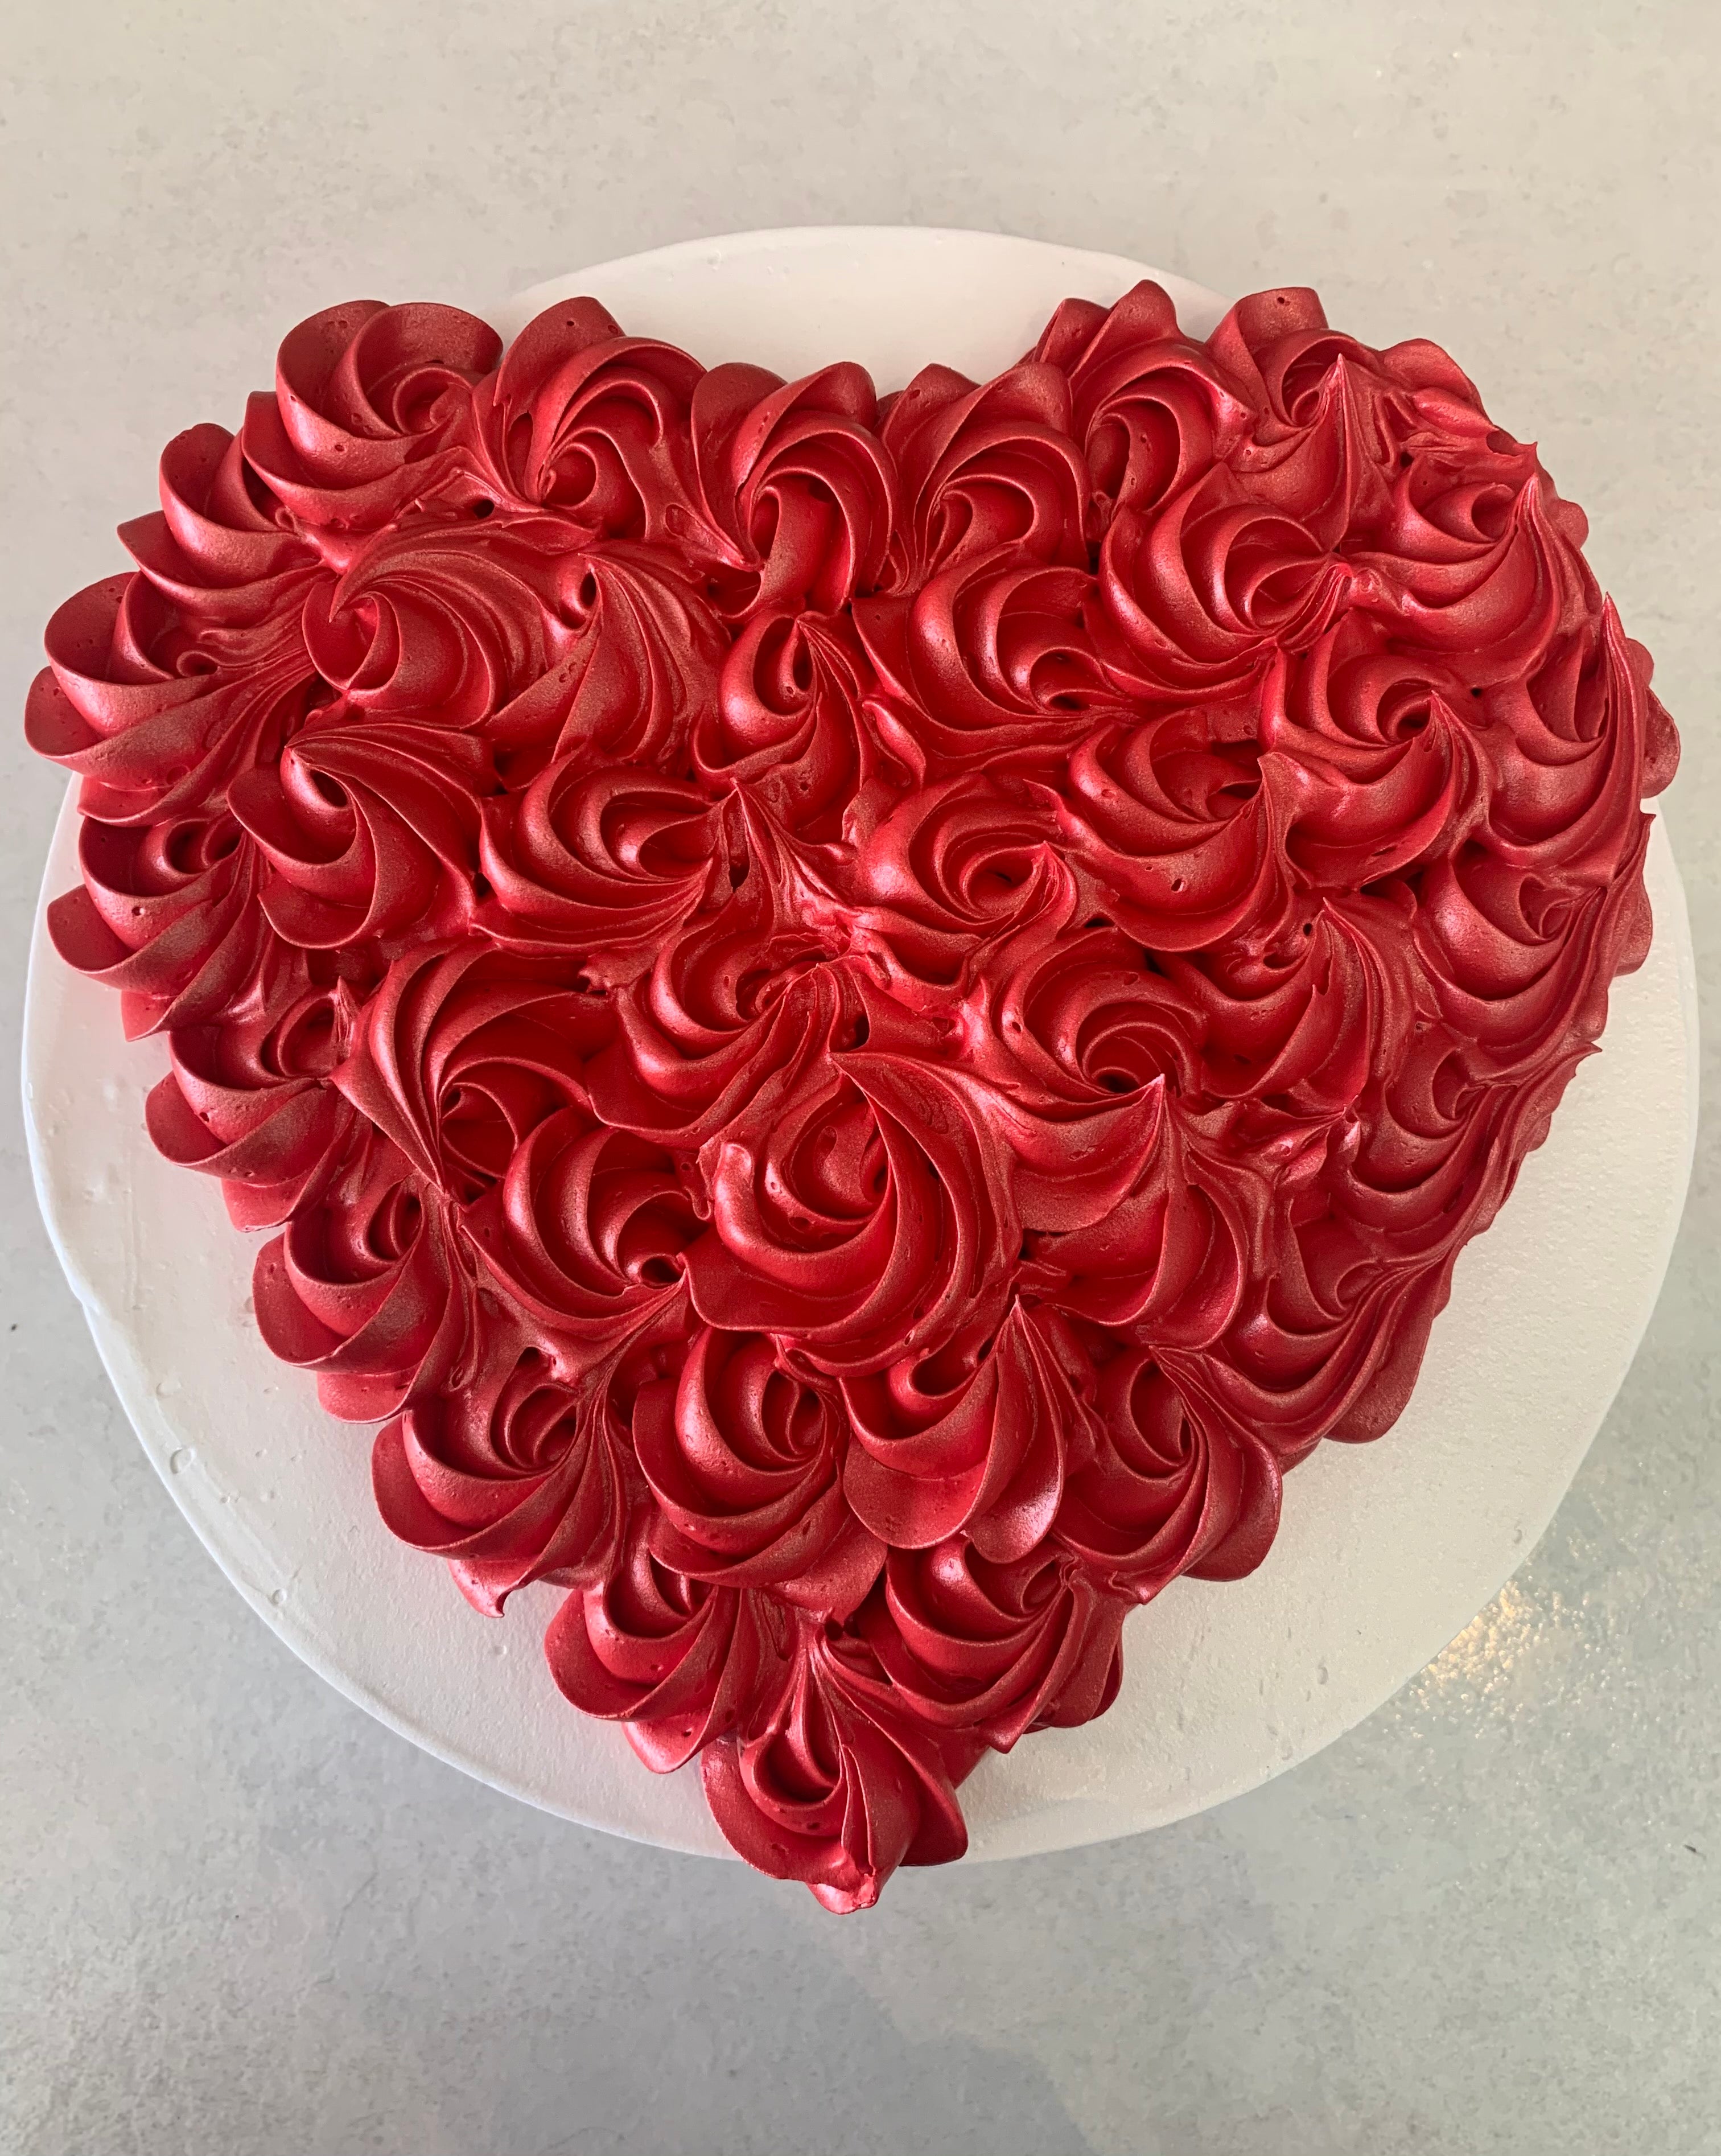 Red & White Heart Shaped Anniversary cake 1.3 kg - Sakigifts.com